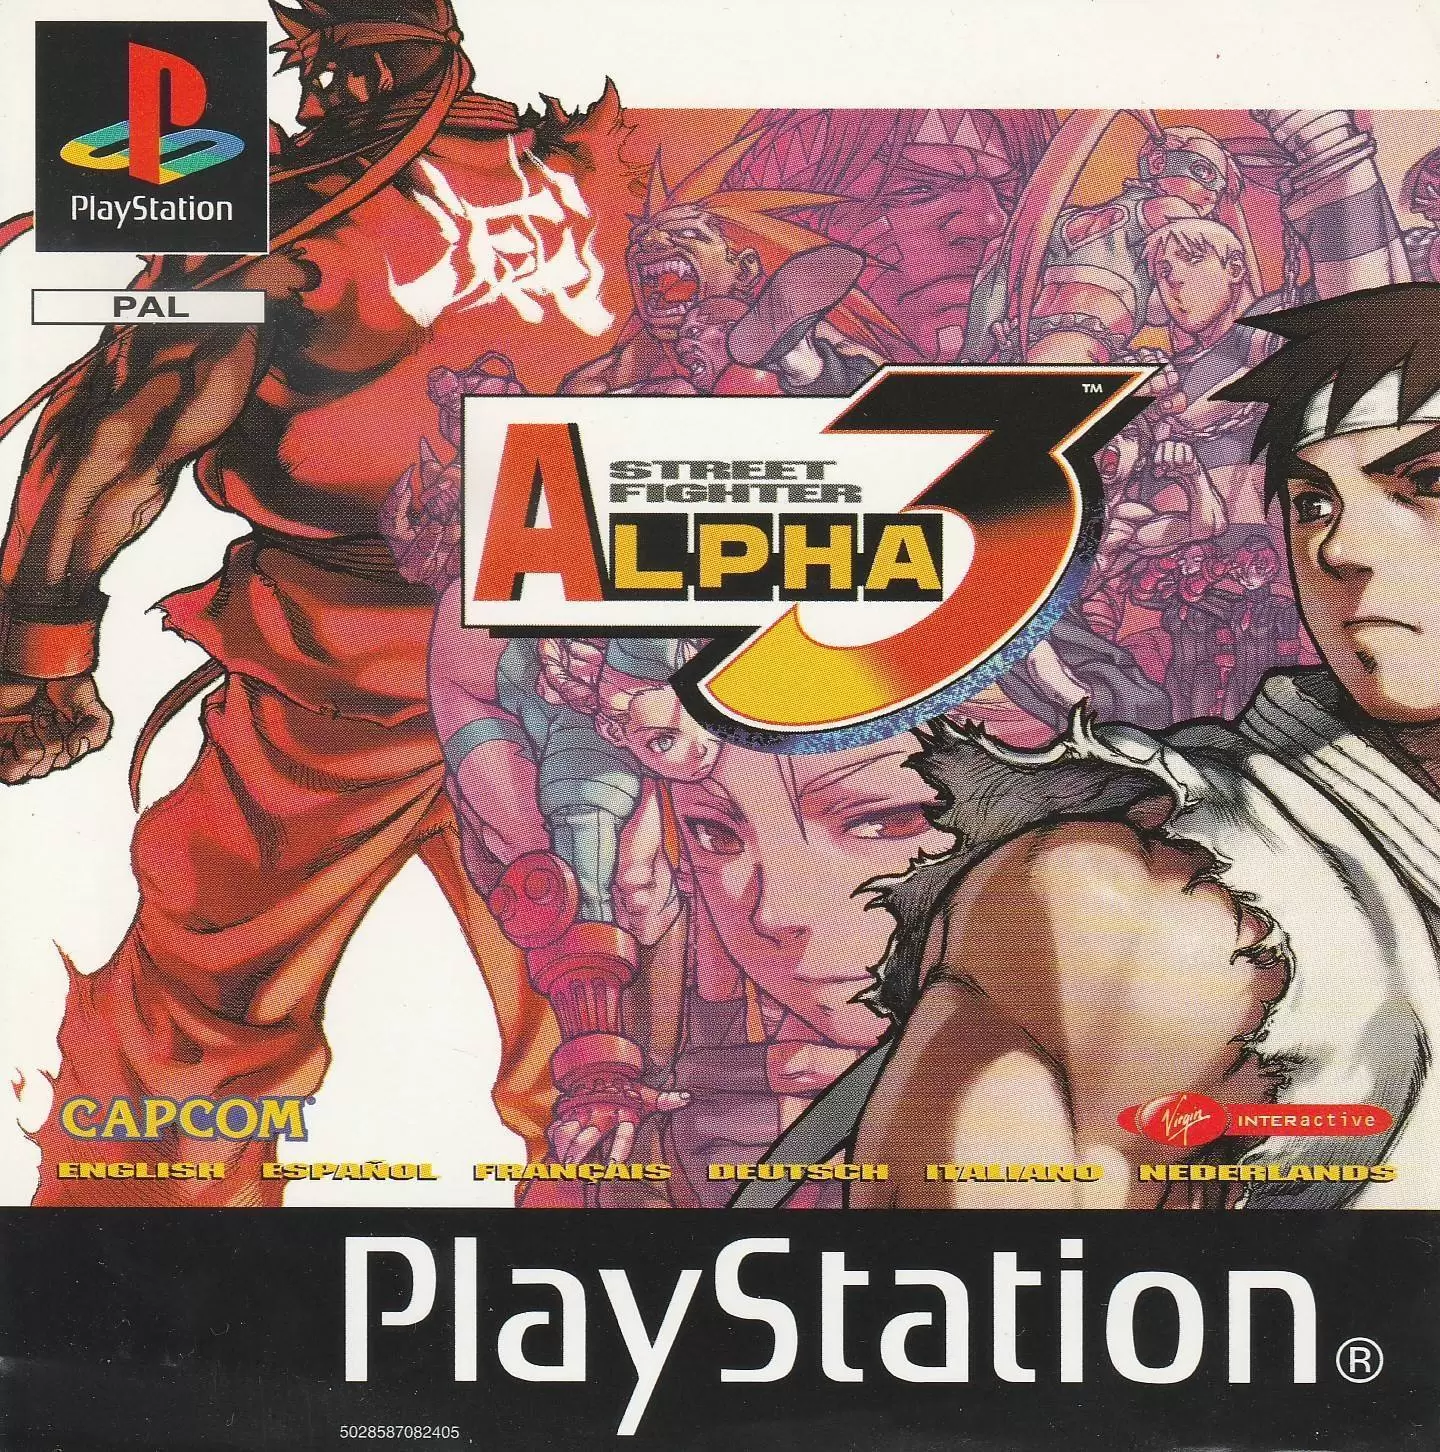 Playstation games - Street Fighter Alpha 3